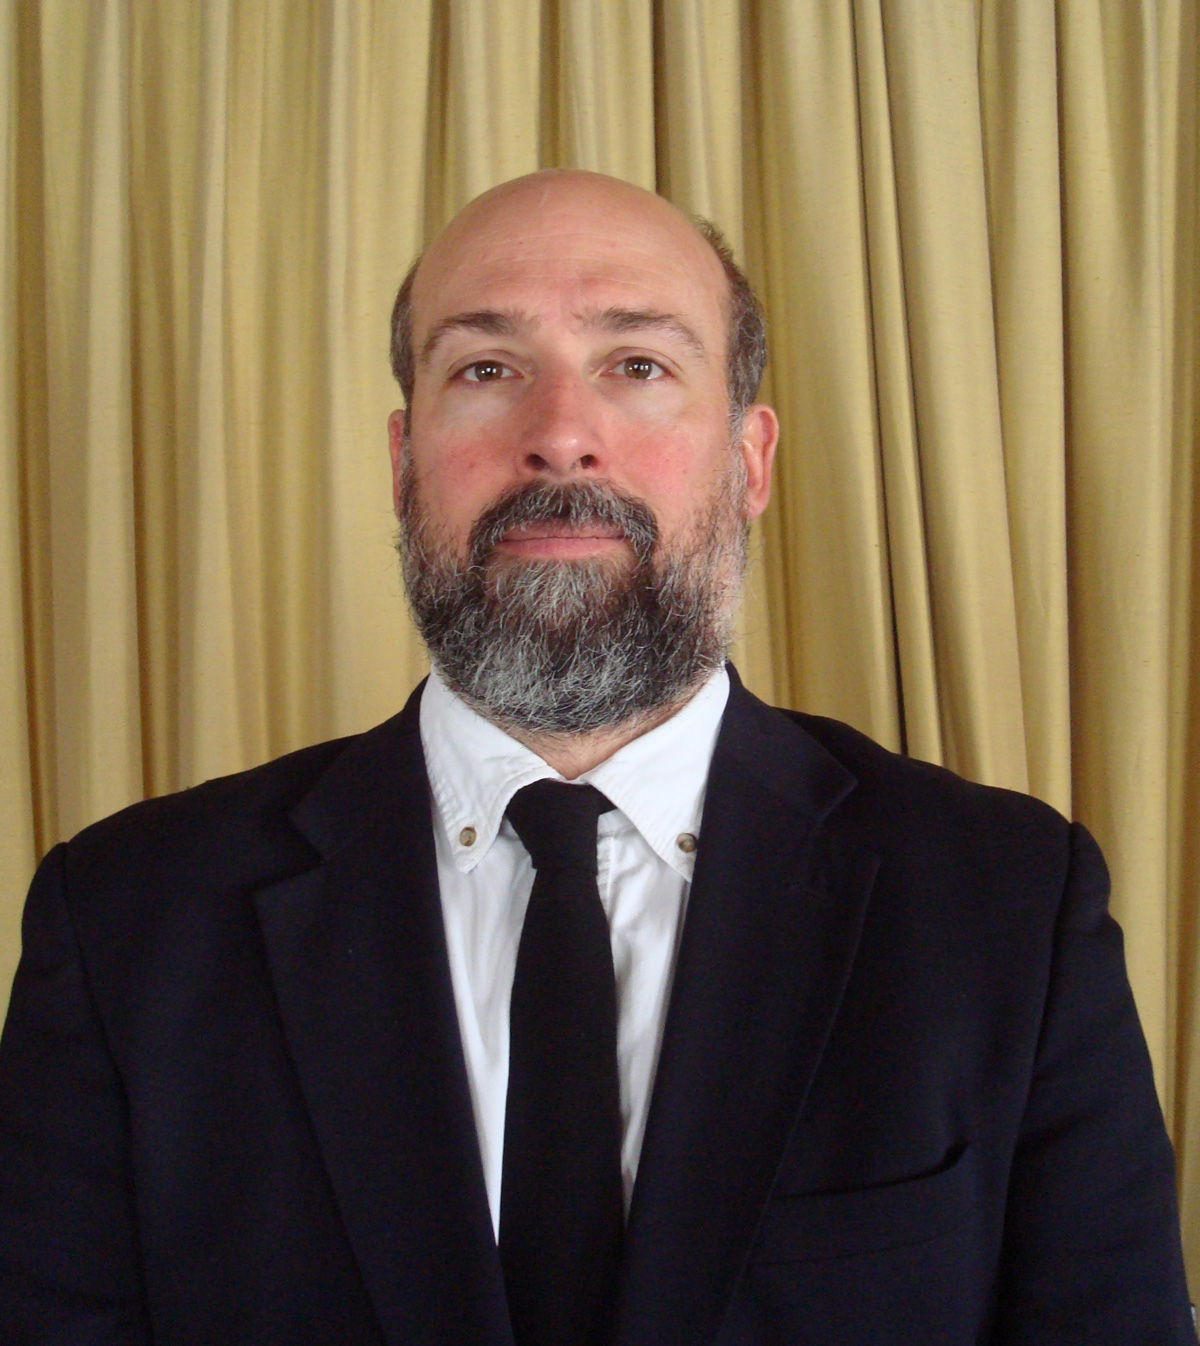 Stuart Card, Ambassador to New York, Grand Lecturer